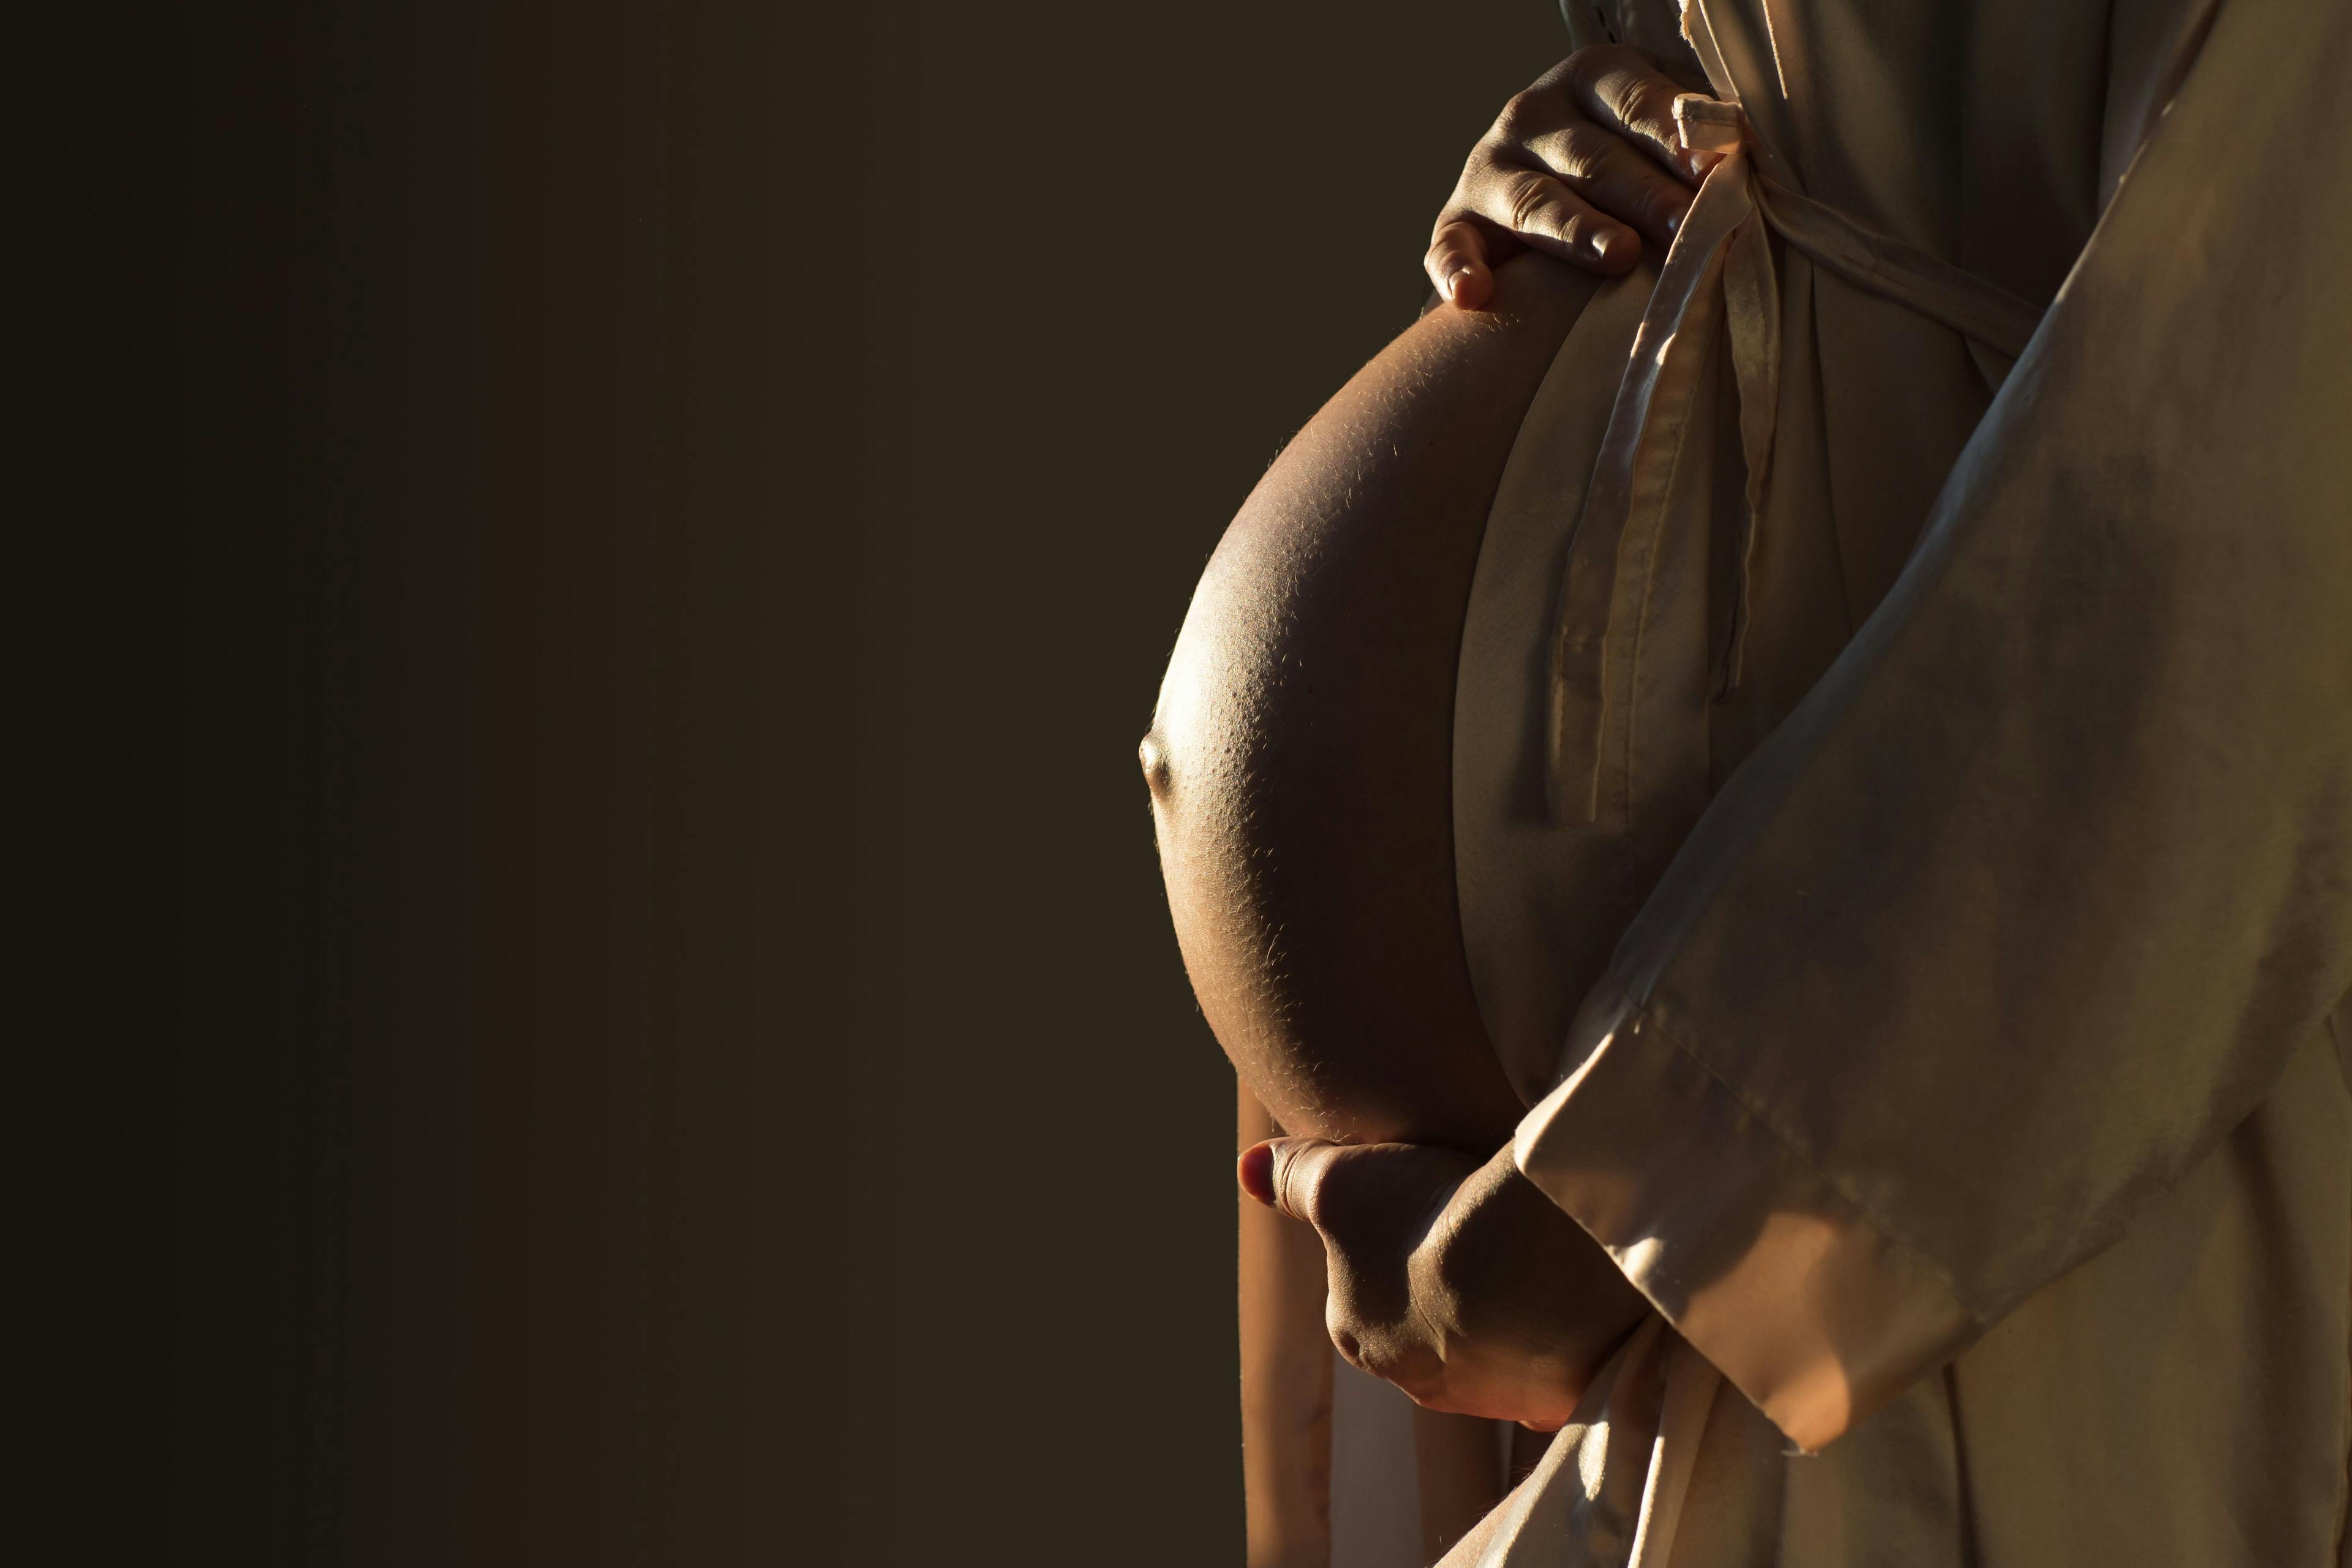 Quality initiatives for decreasing racial disparities in maternal morbidity